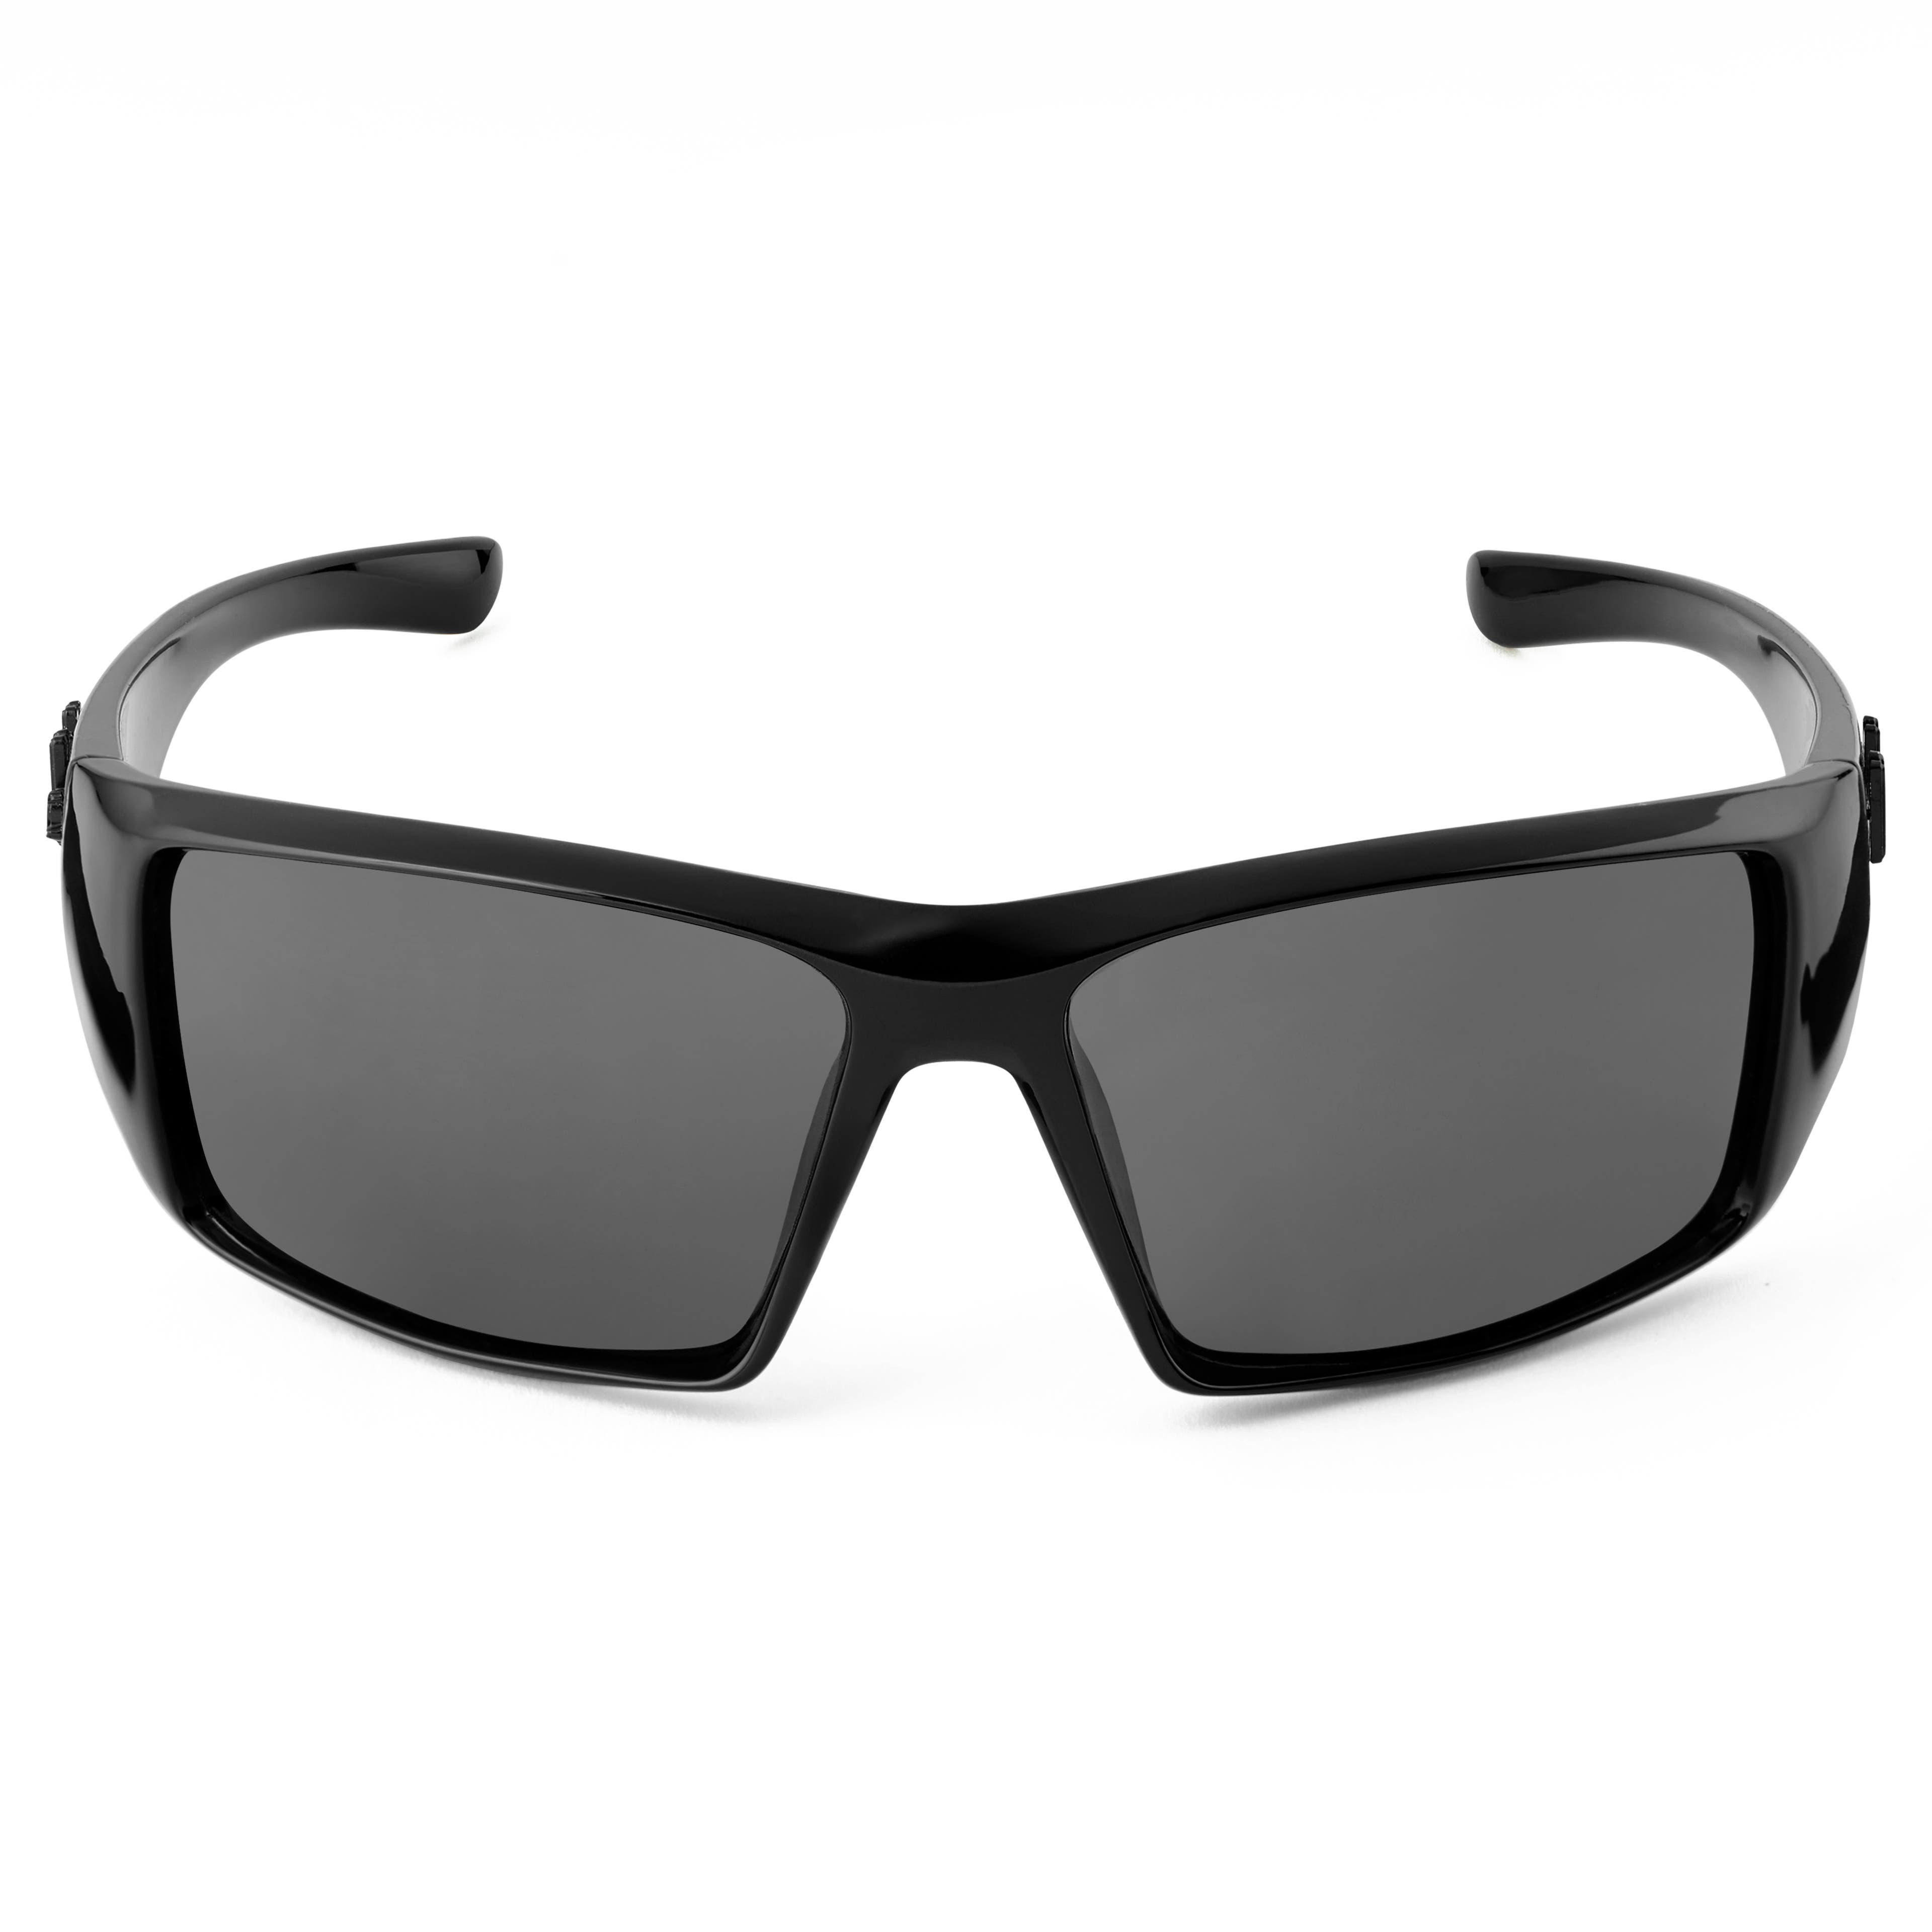 Mick Verge Black & Grey Polarised Sunglasses – Category 3.5, In stock!